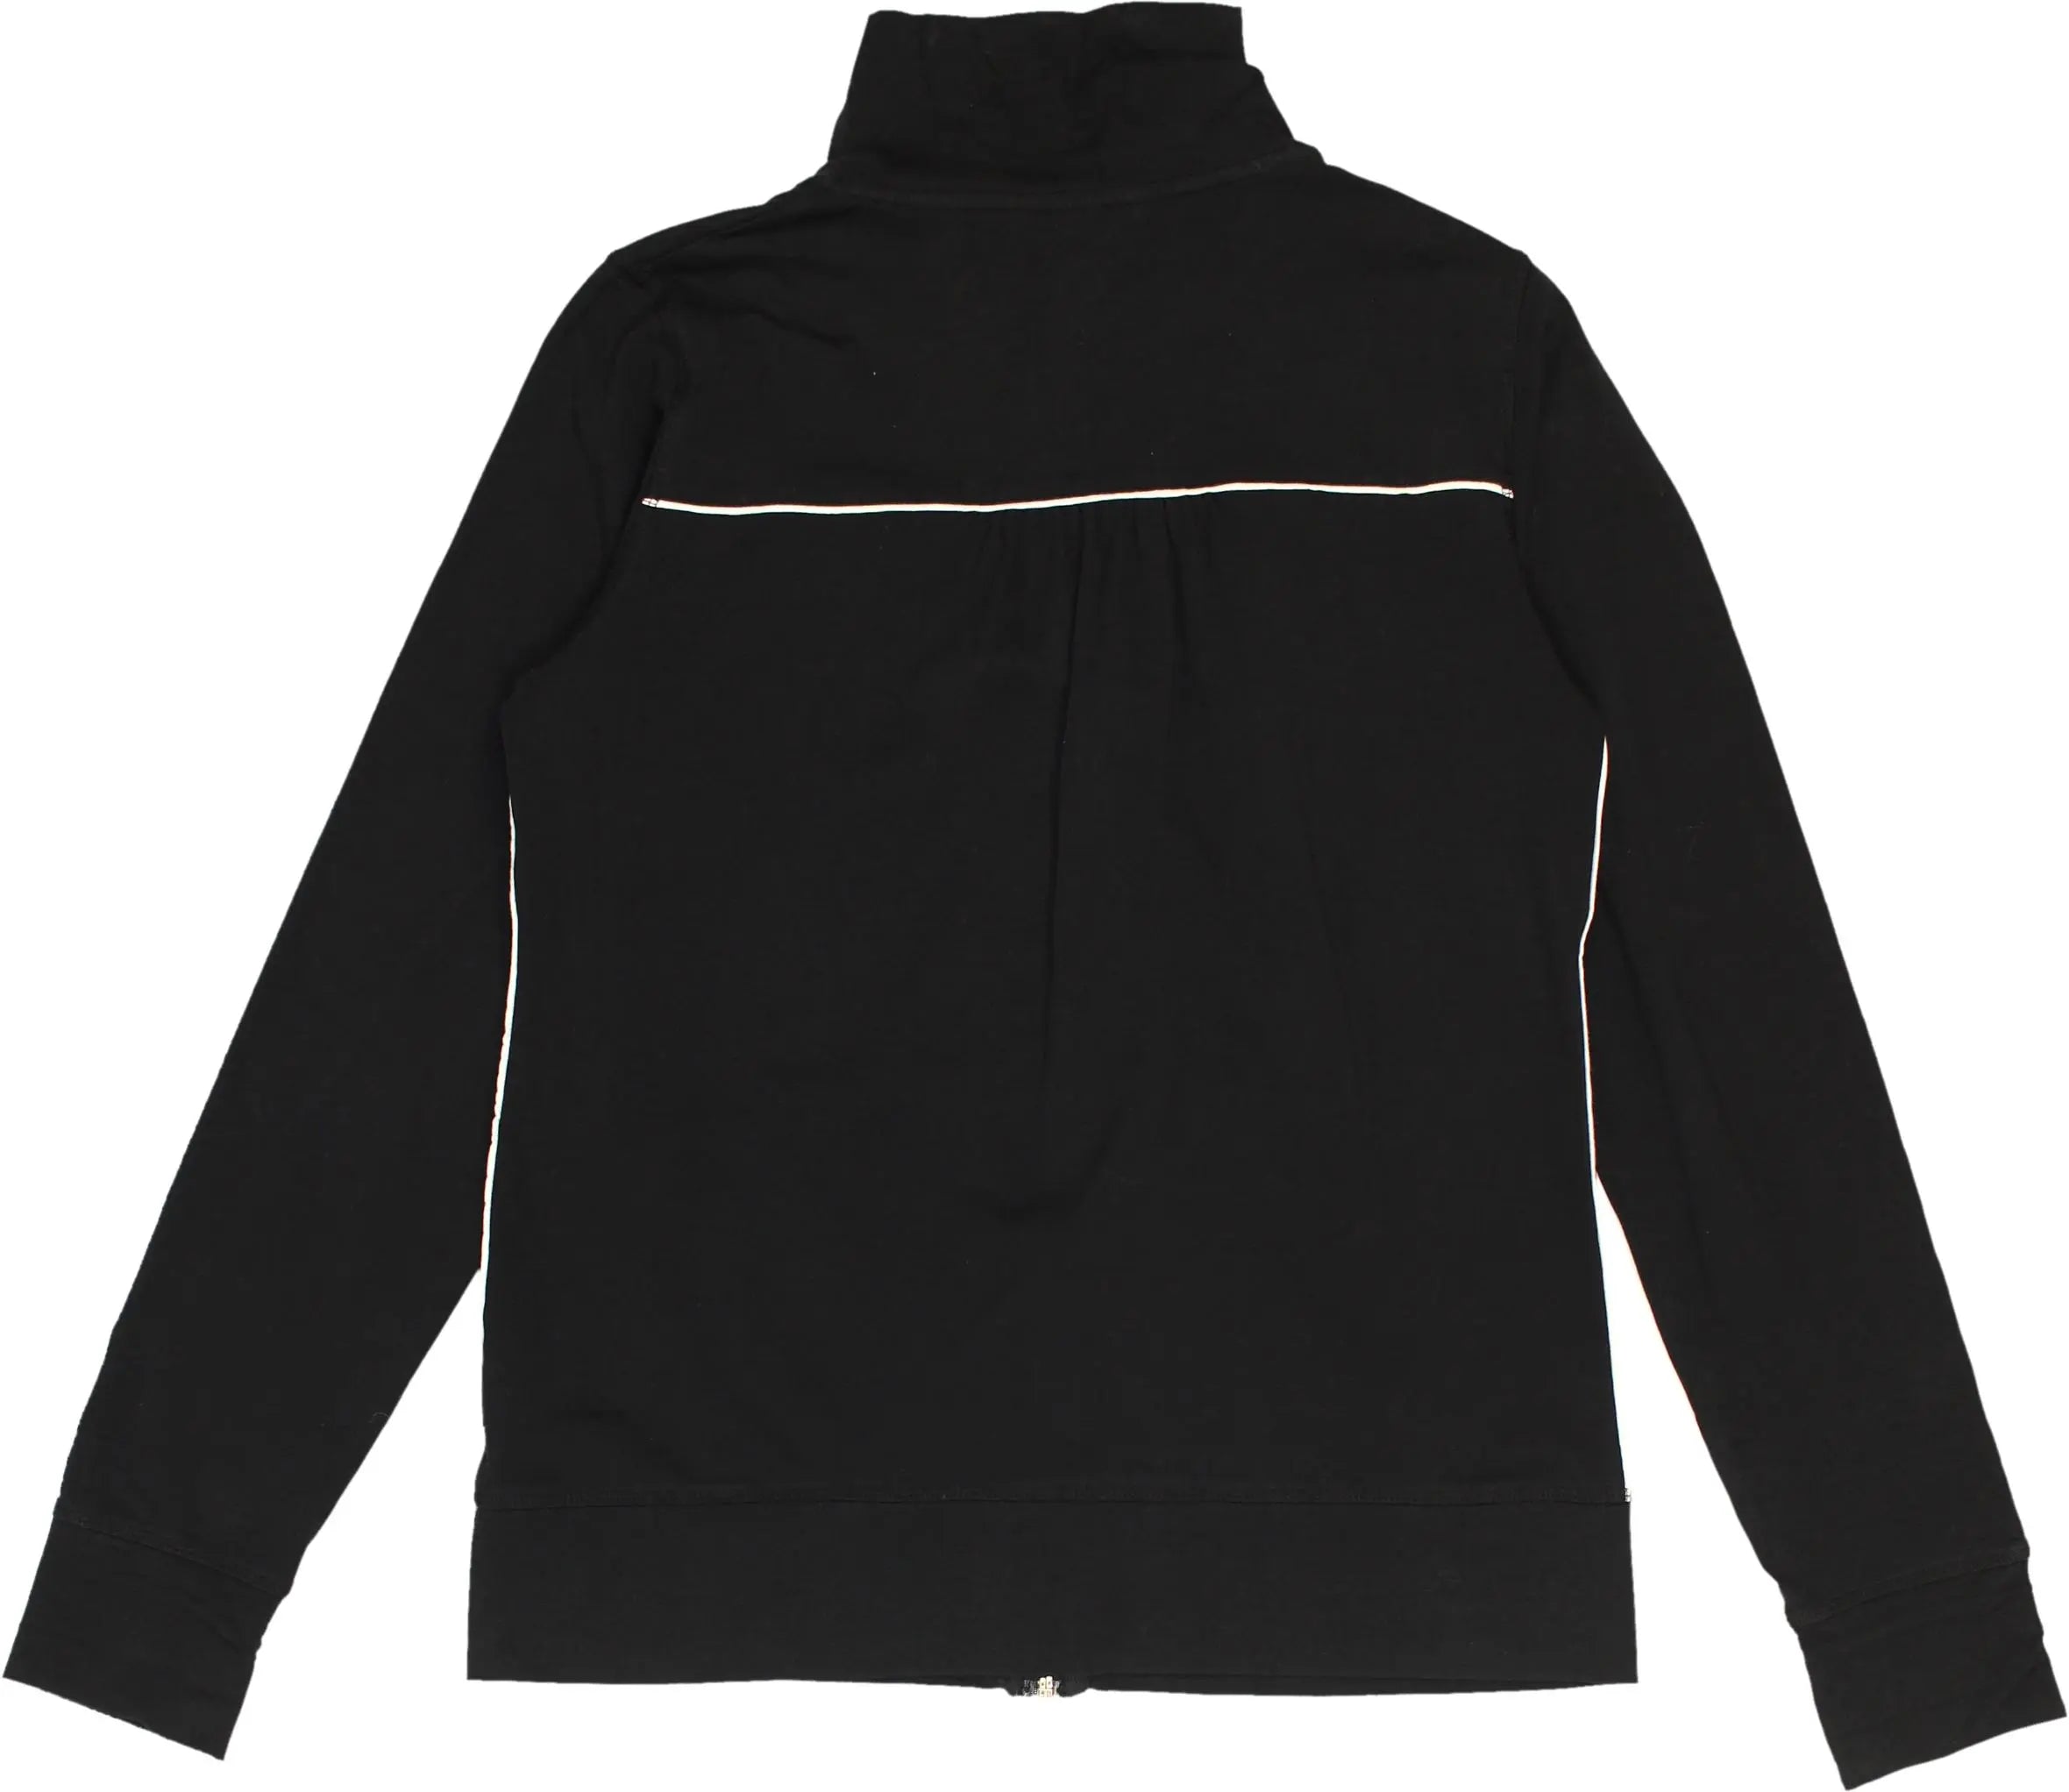 Miss Etam - Track Jacket- ThriftTale.com - Vintage and second handclothing